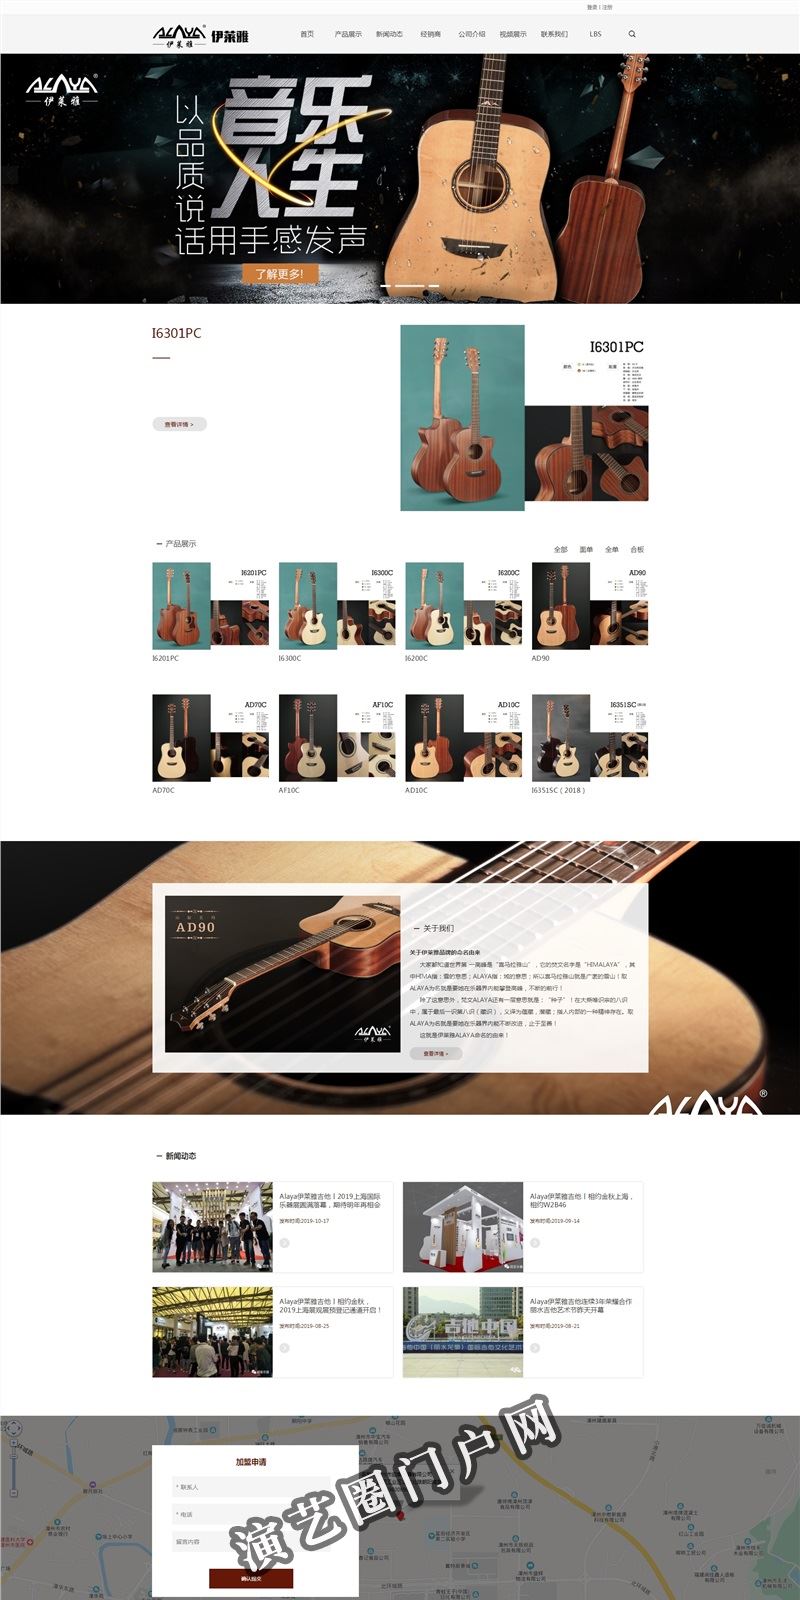 Alaya伊莱雅吉他|吉他全国招商加盟|吉他厂家|国外吉他品牌代工-漳州市超音乐器有限公司截图